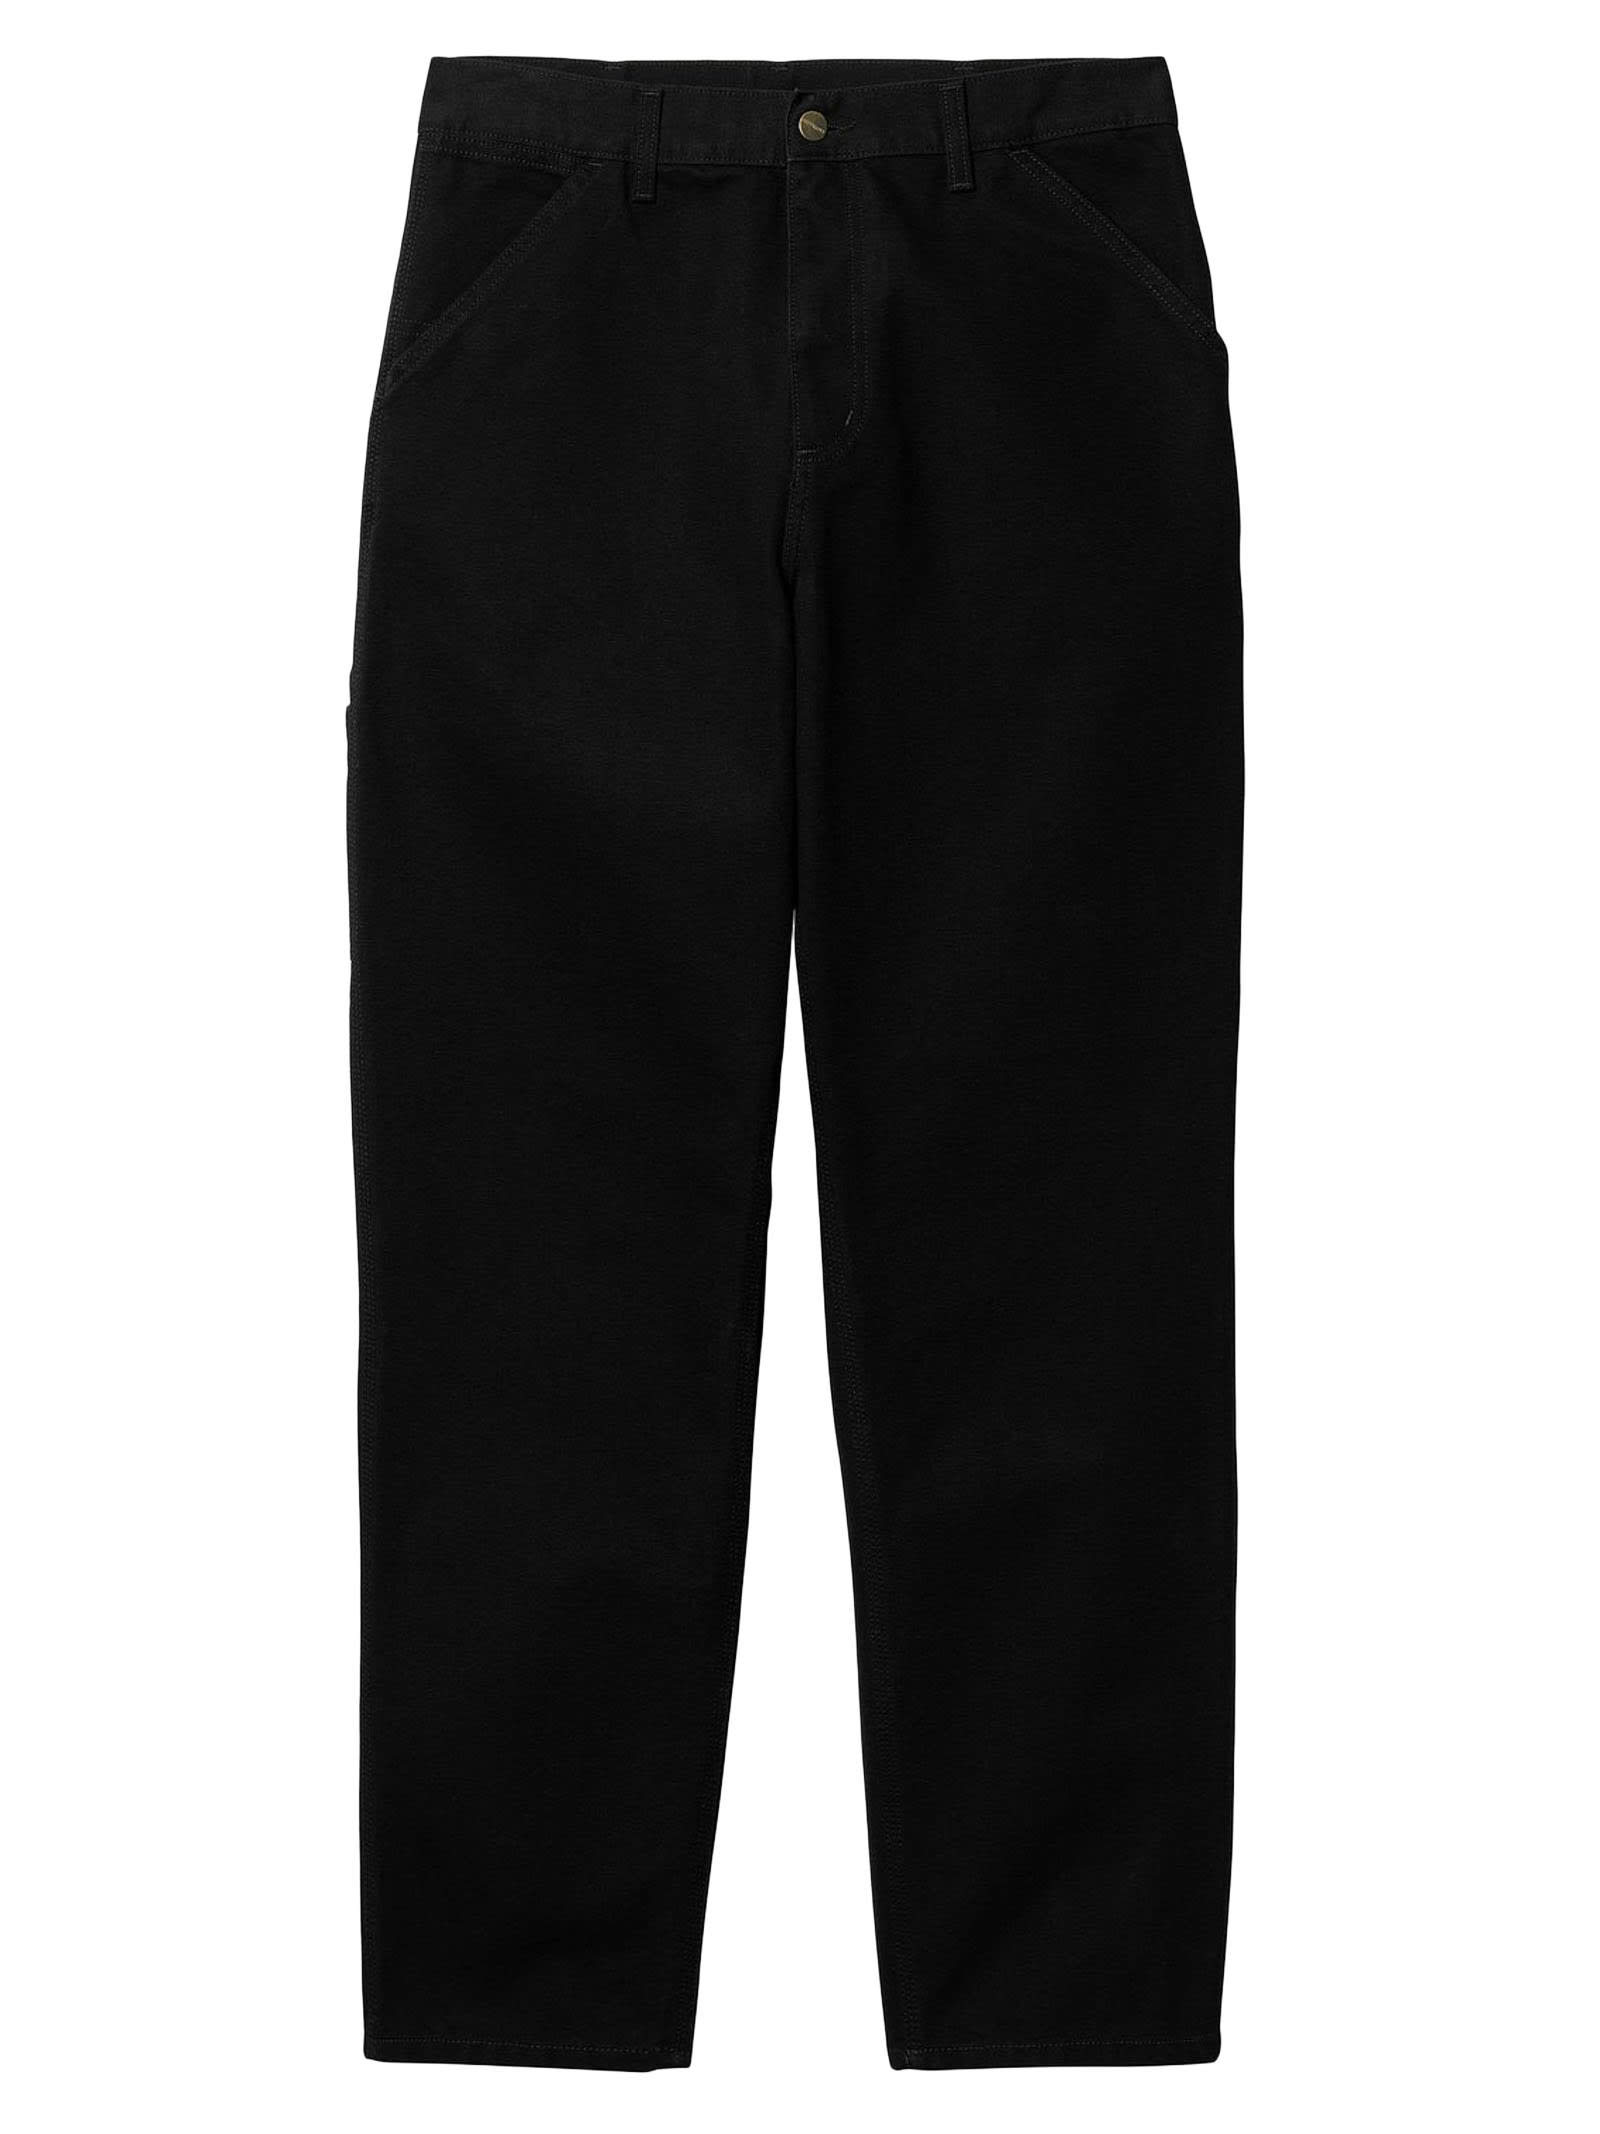 Shop Carhartt Trousers Black